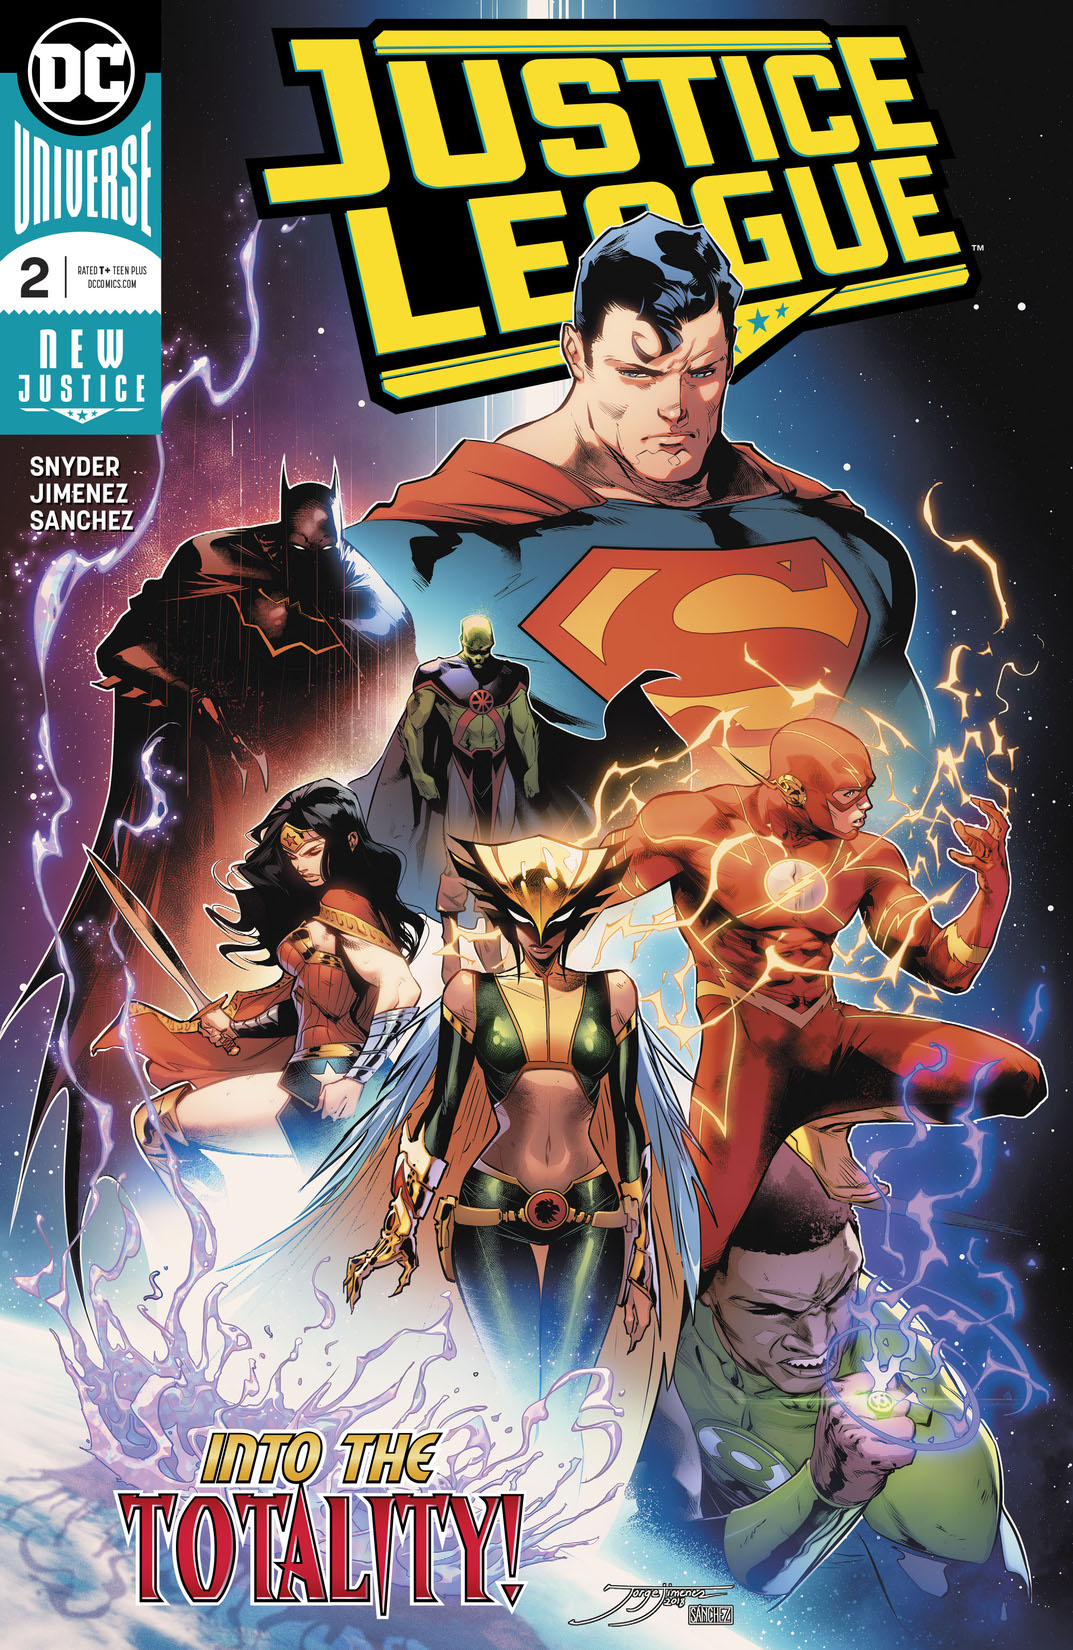 Justice League (2018-) #2 preview images